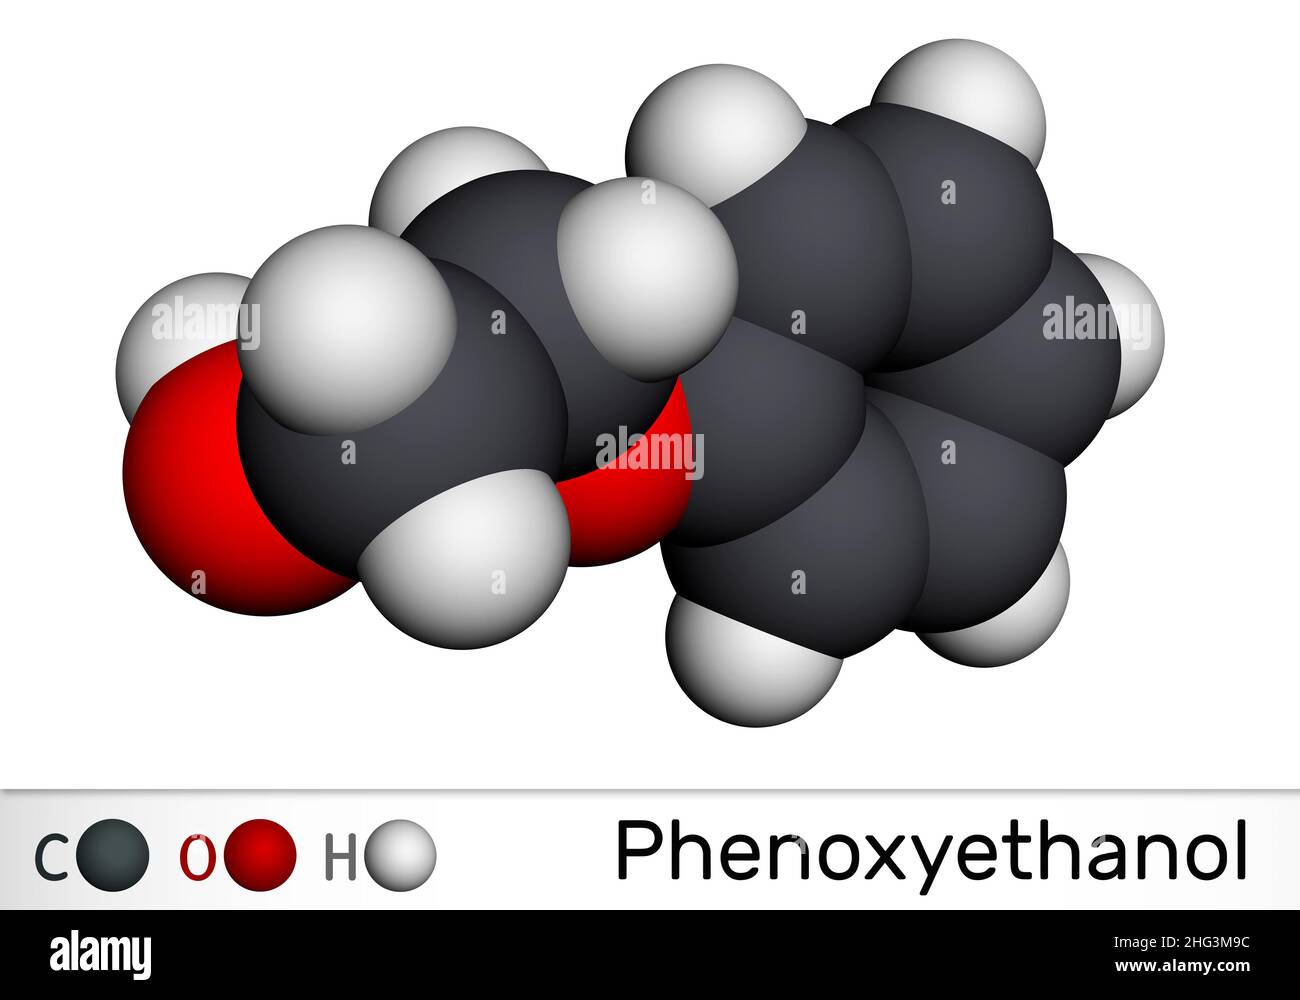 Phenoxyethanol preservative molecule, illustration - Stock Image -  F027/9106 - Science Photo Library